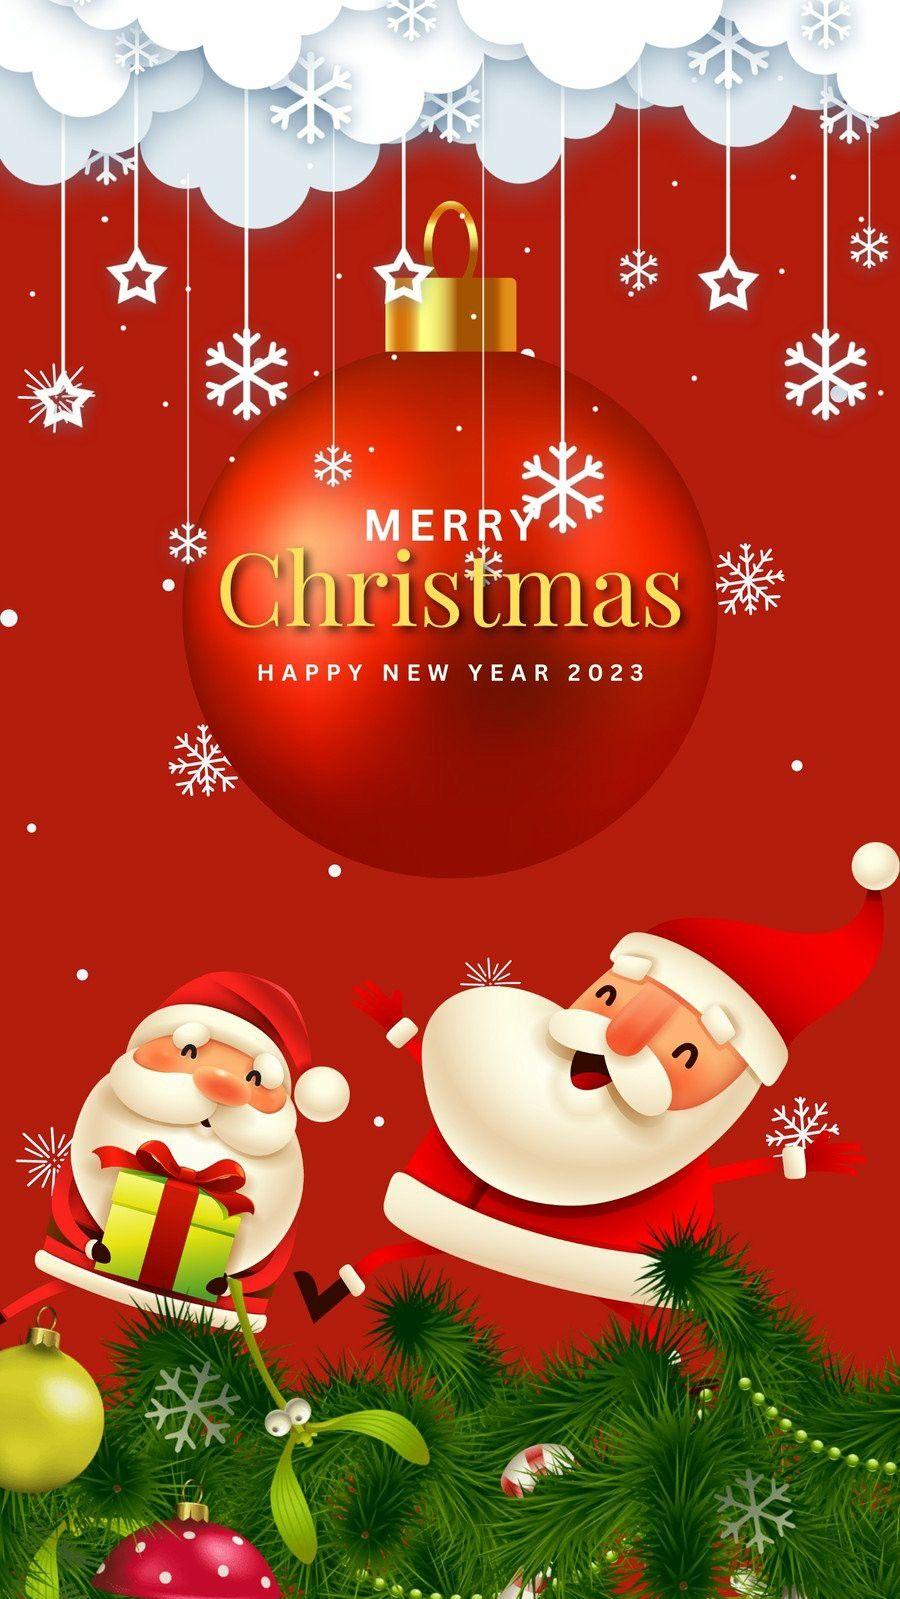 Joyful Christmas Wishes in Christmas wishes Merry